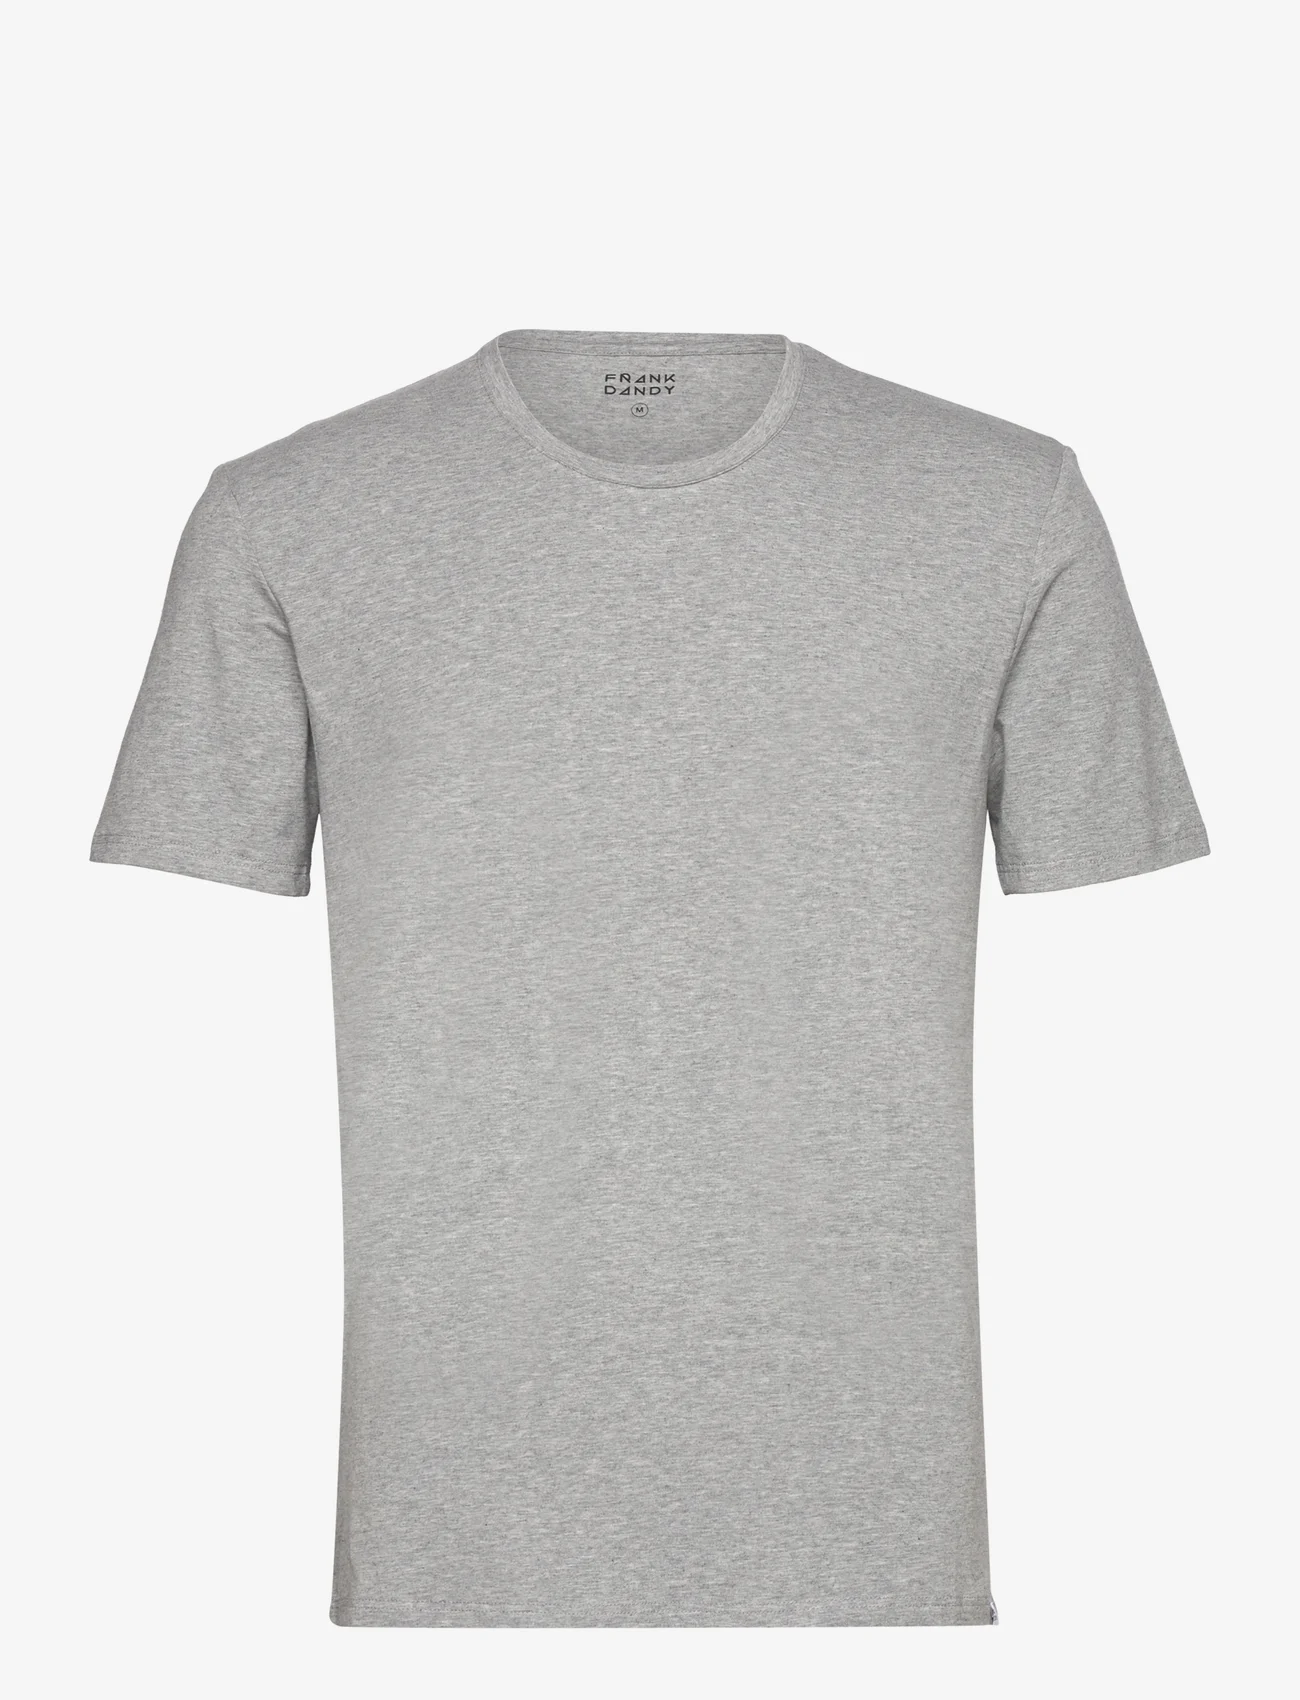 Frank Dandy - Bamboo Tee - basic t-shirts - grey melange - 0